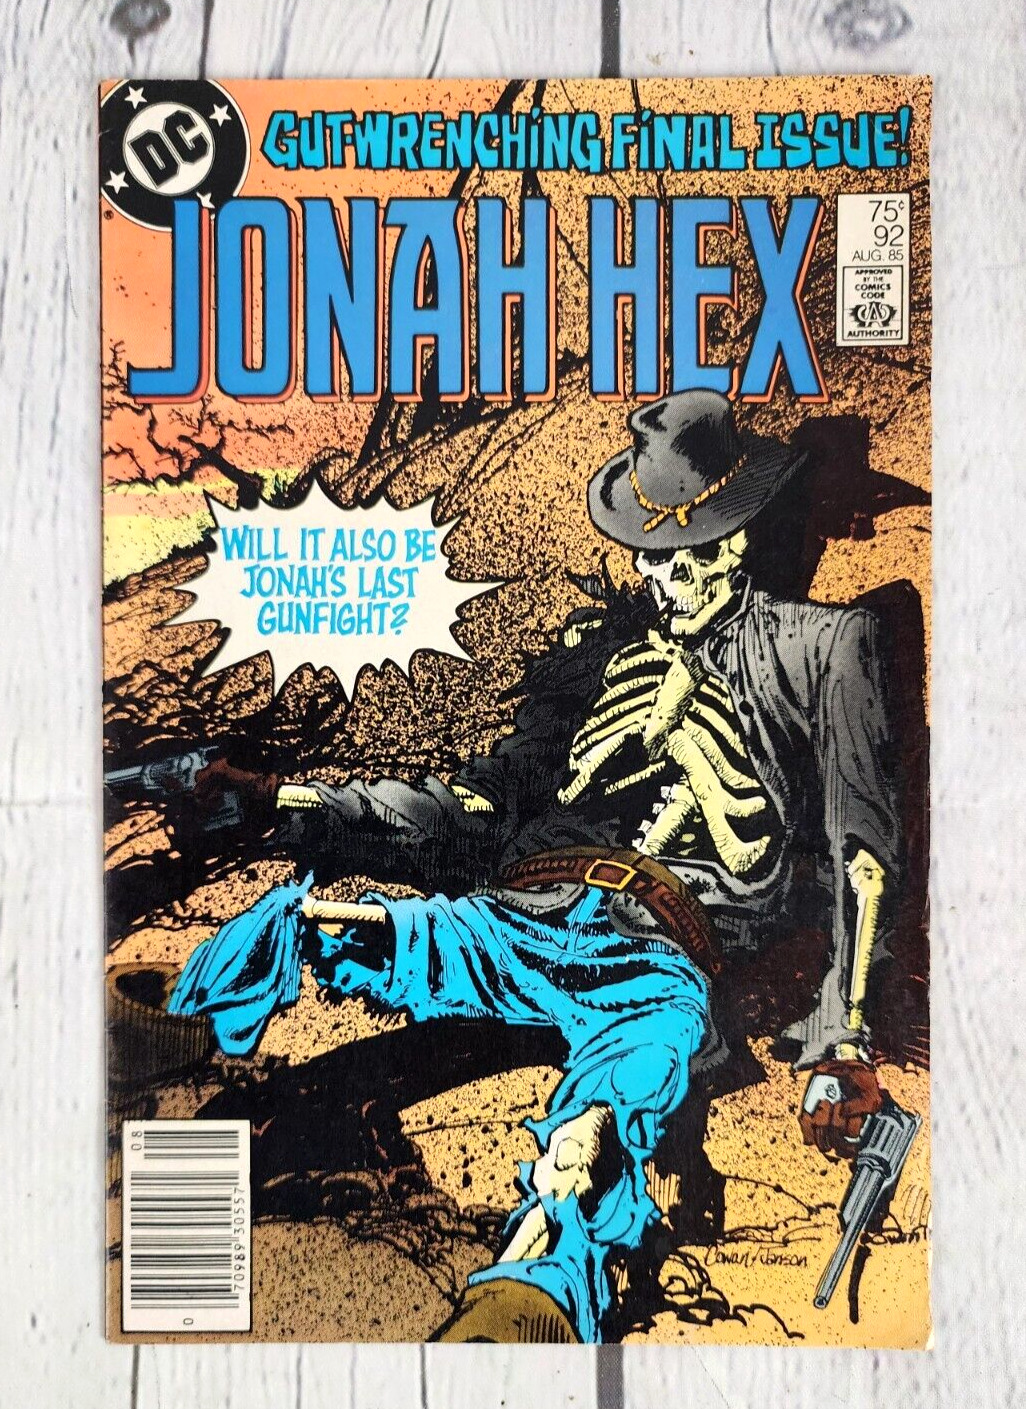 DC COMICS JONAH HEX #92 - CLASSIC HORROR COVER - LAST ISSUE - 1985